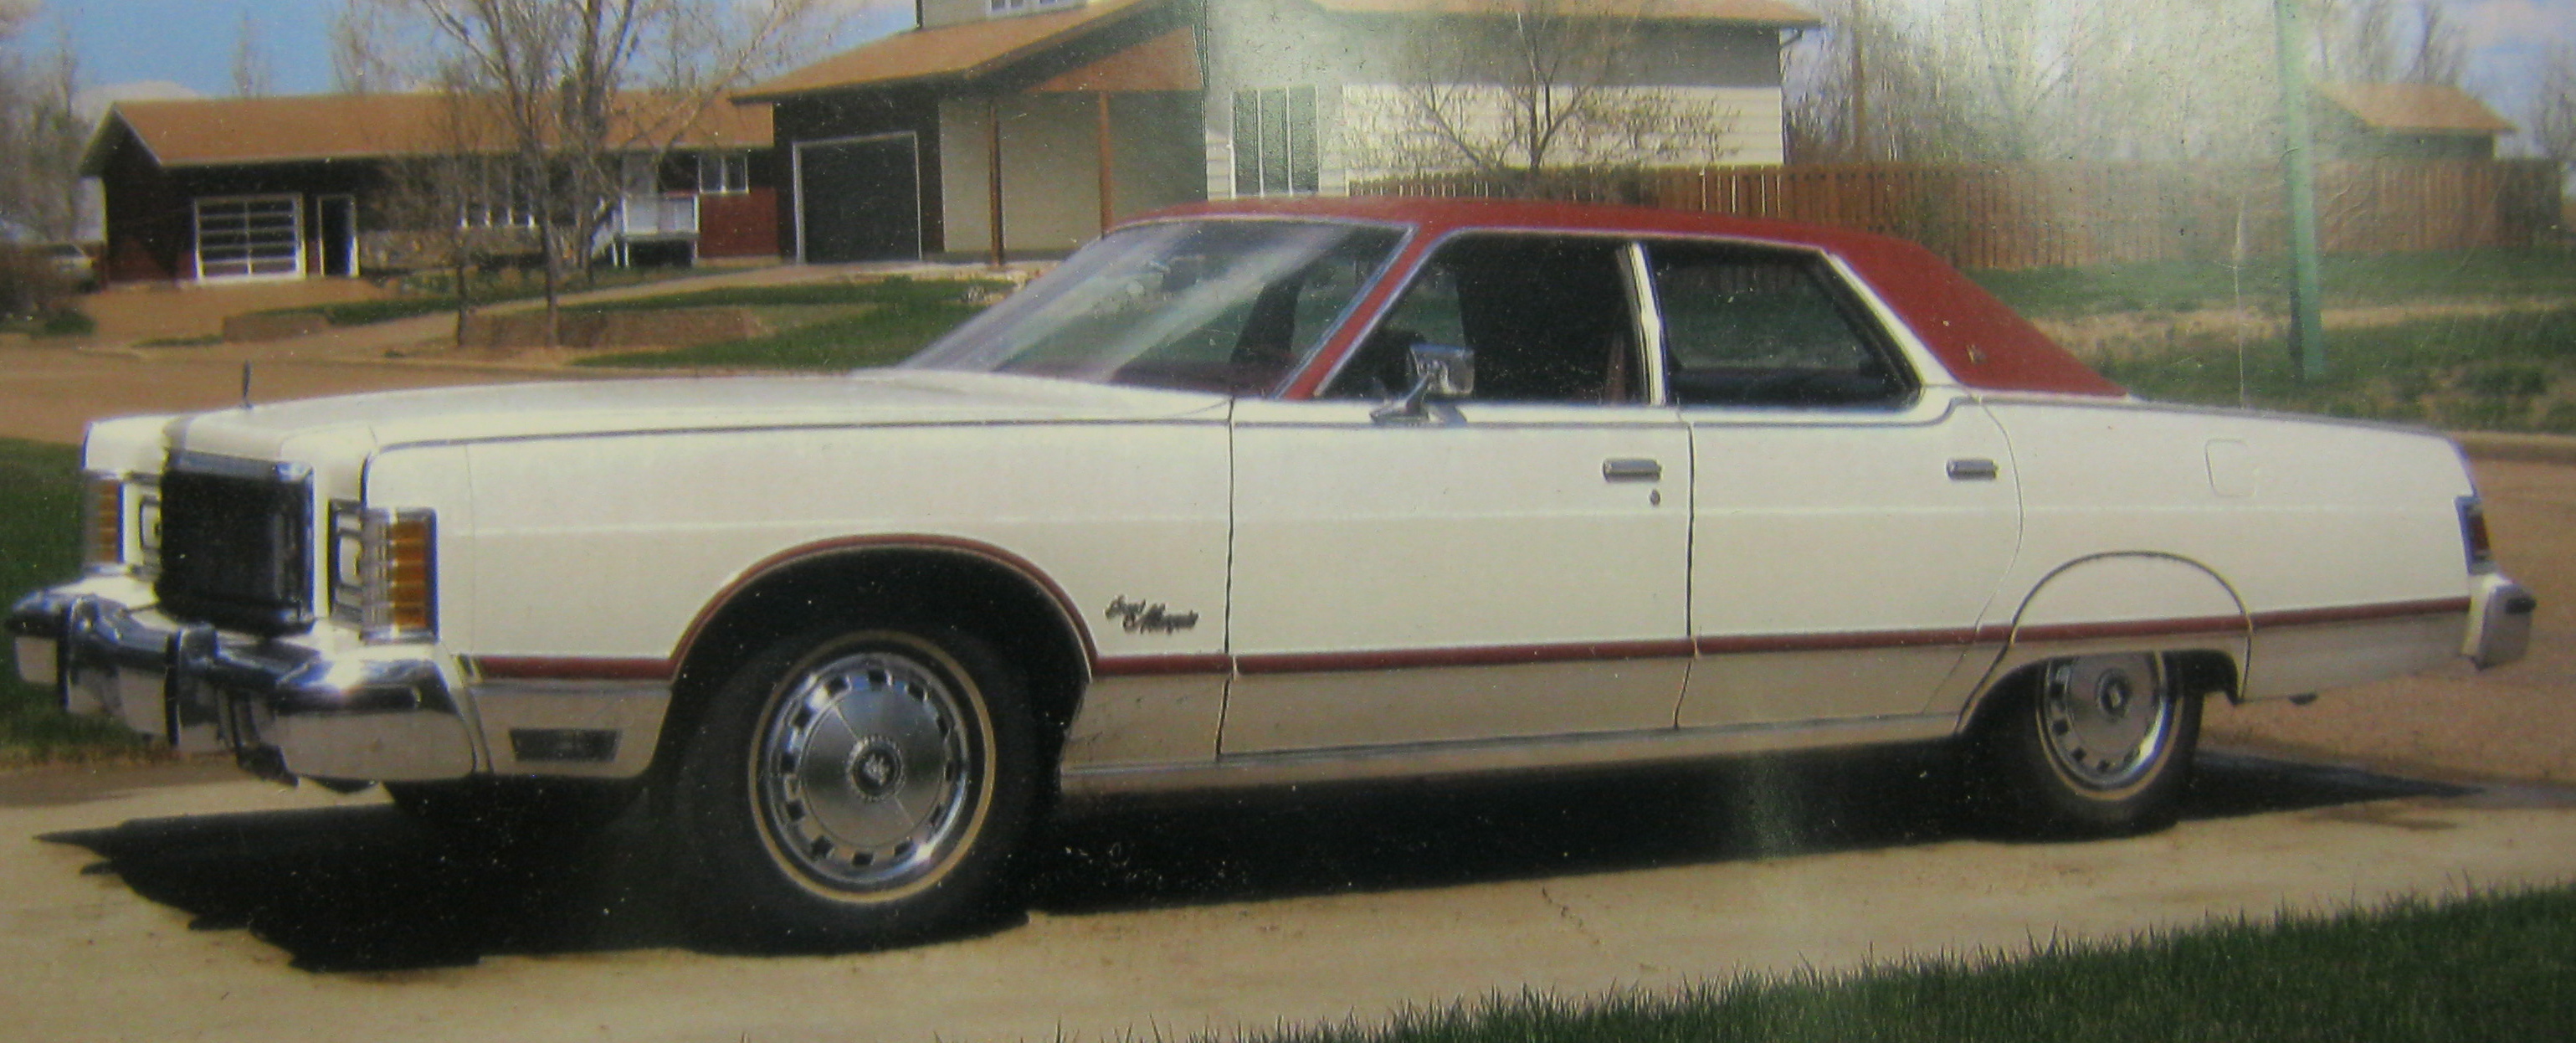 1976 Ford mercury marquis #2